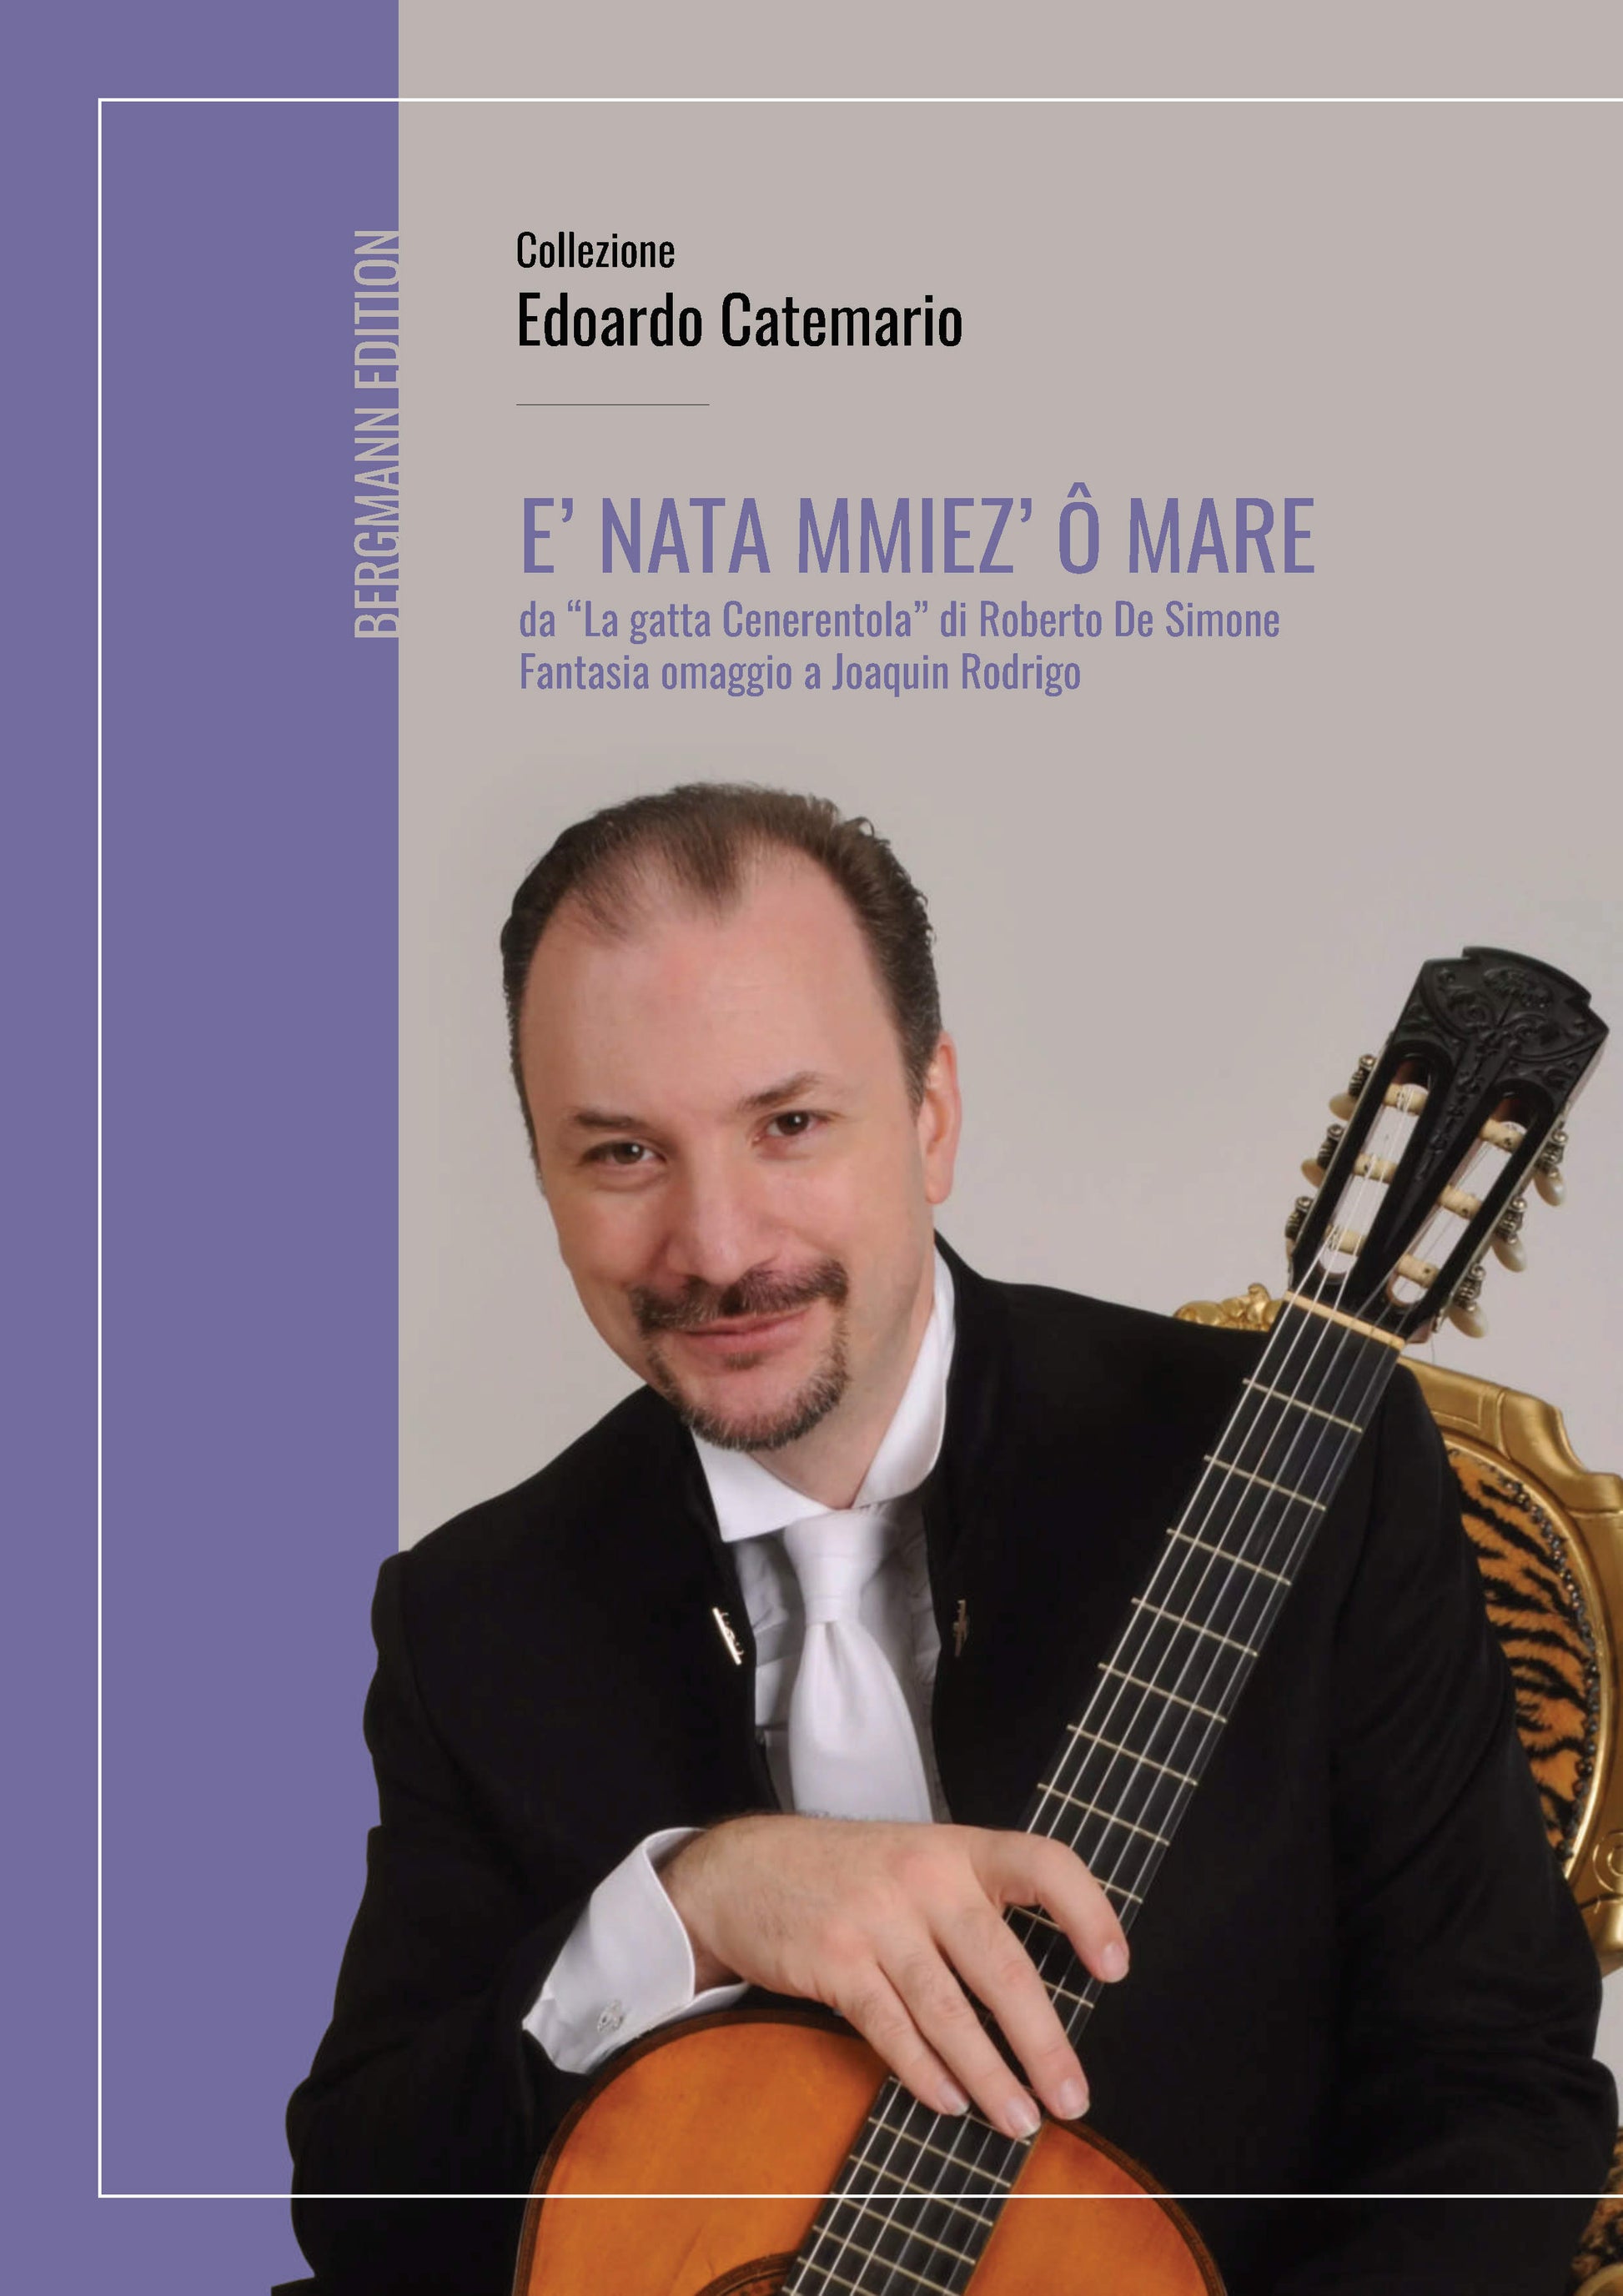 Edoardo Catemario, E’ nata mmiezo ‘o mare - preview of the cover